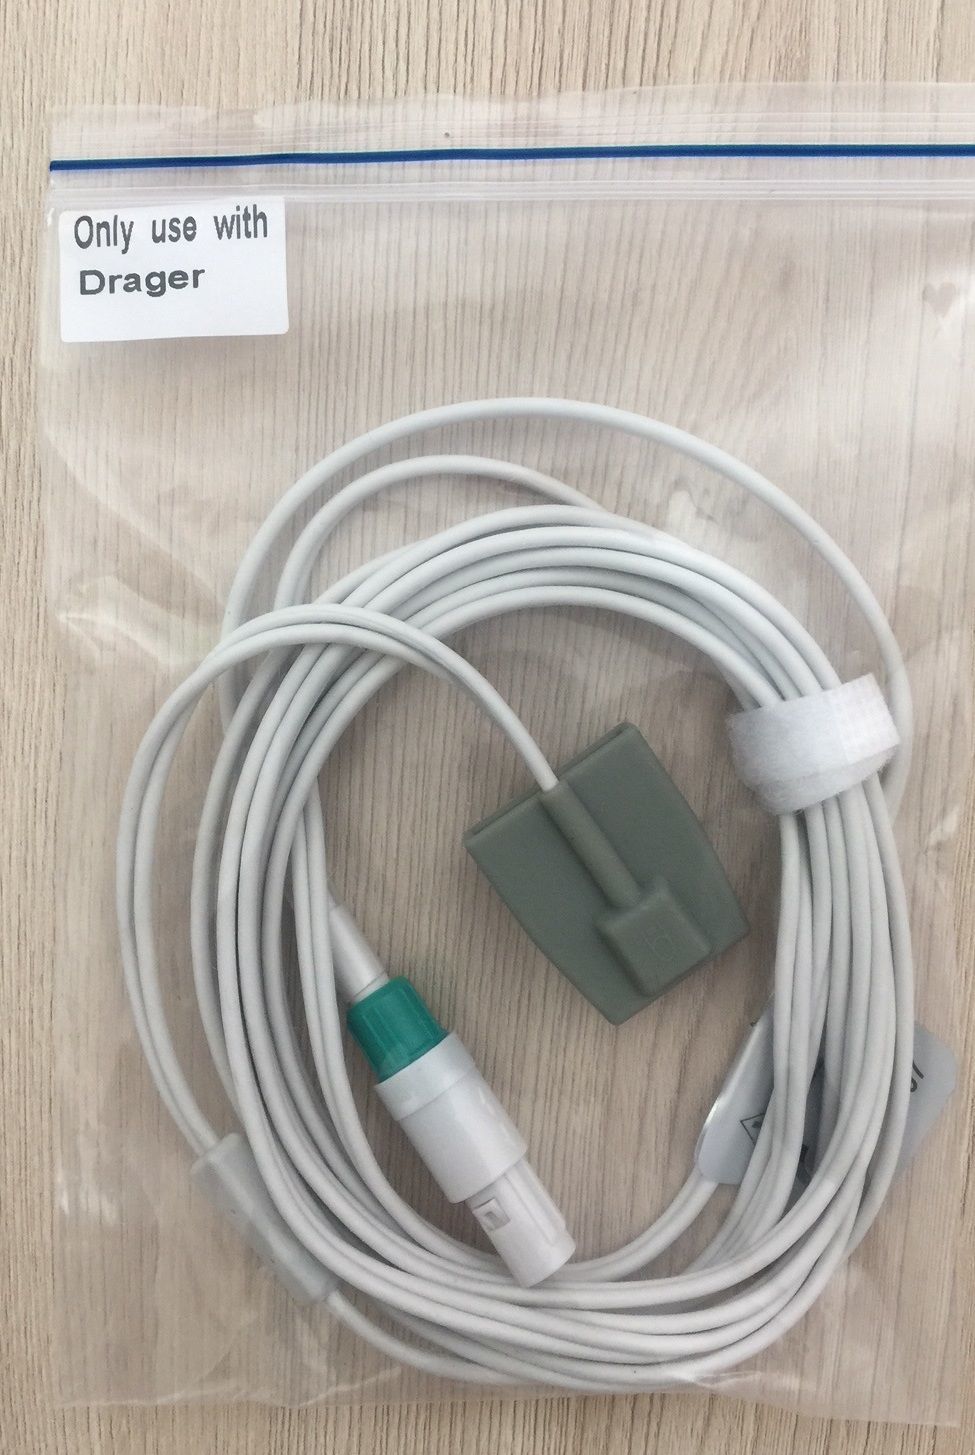 Spo2 Child probe cable for Draeger Vista120_สานโพรบเซนเซอร์วัดแซทสำหรับเด็กโตเครื่องวัดสัญญาณชีพ Draeger Vista120